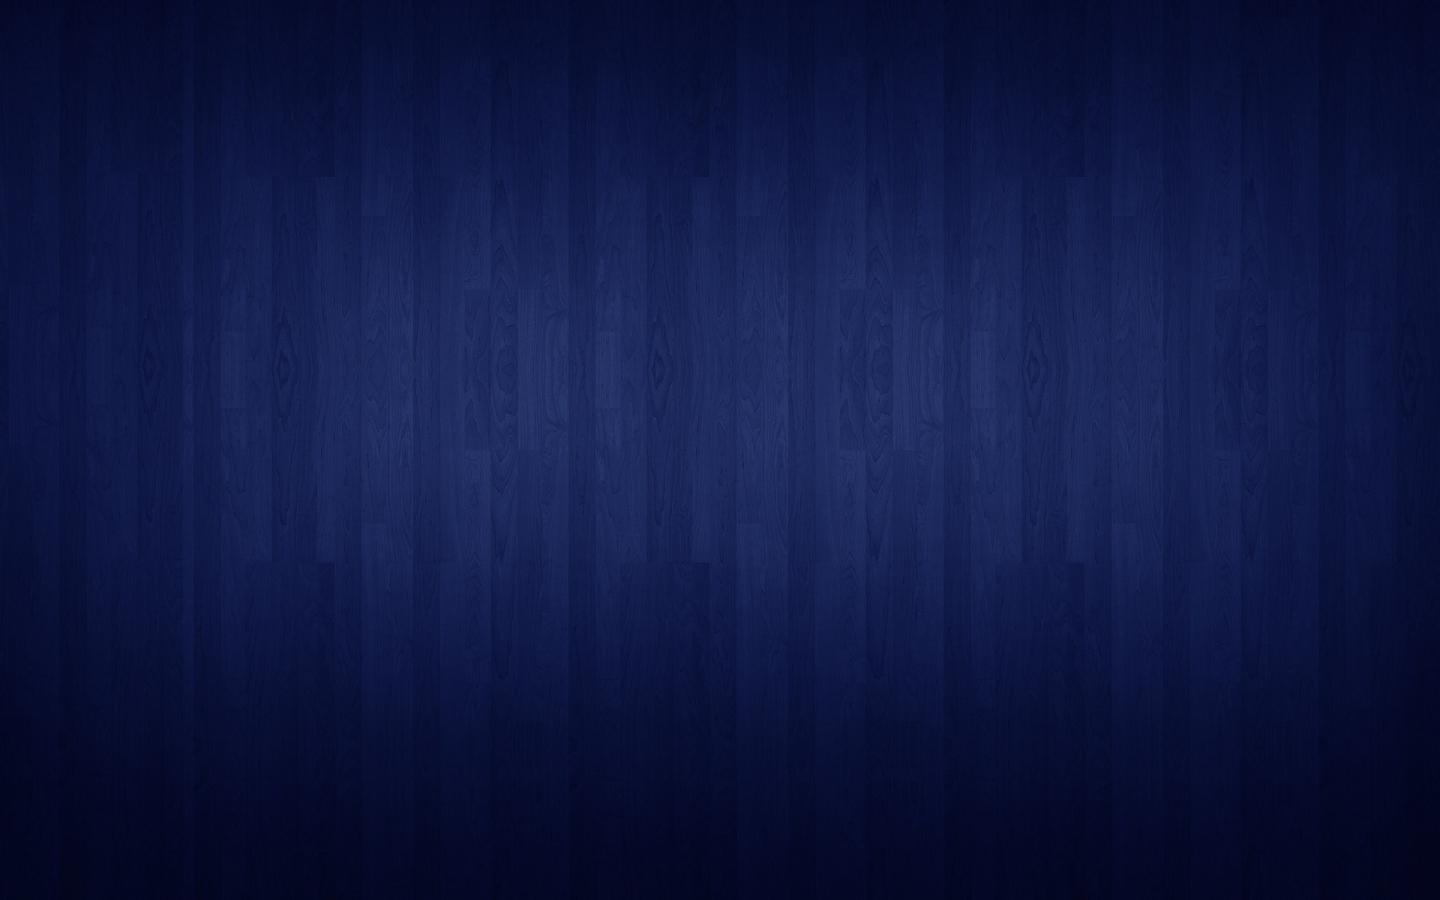 Plain Dark Blue Wallpaper 18 Image Dark Blue Wallpaper, Neon Blue Wallpaper 69 Image, Dark Solid Purple Wallpaper 65 Image, Free Download Displaying 10 Image For Dark Blue